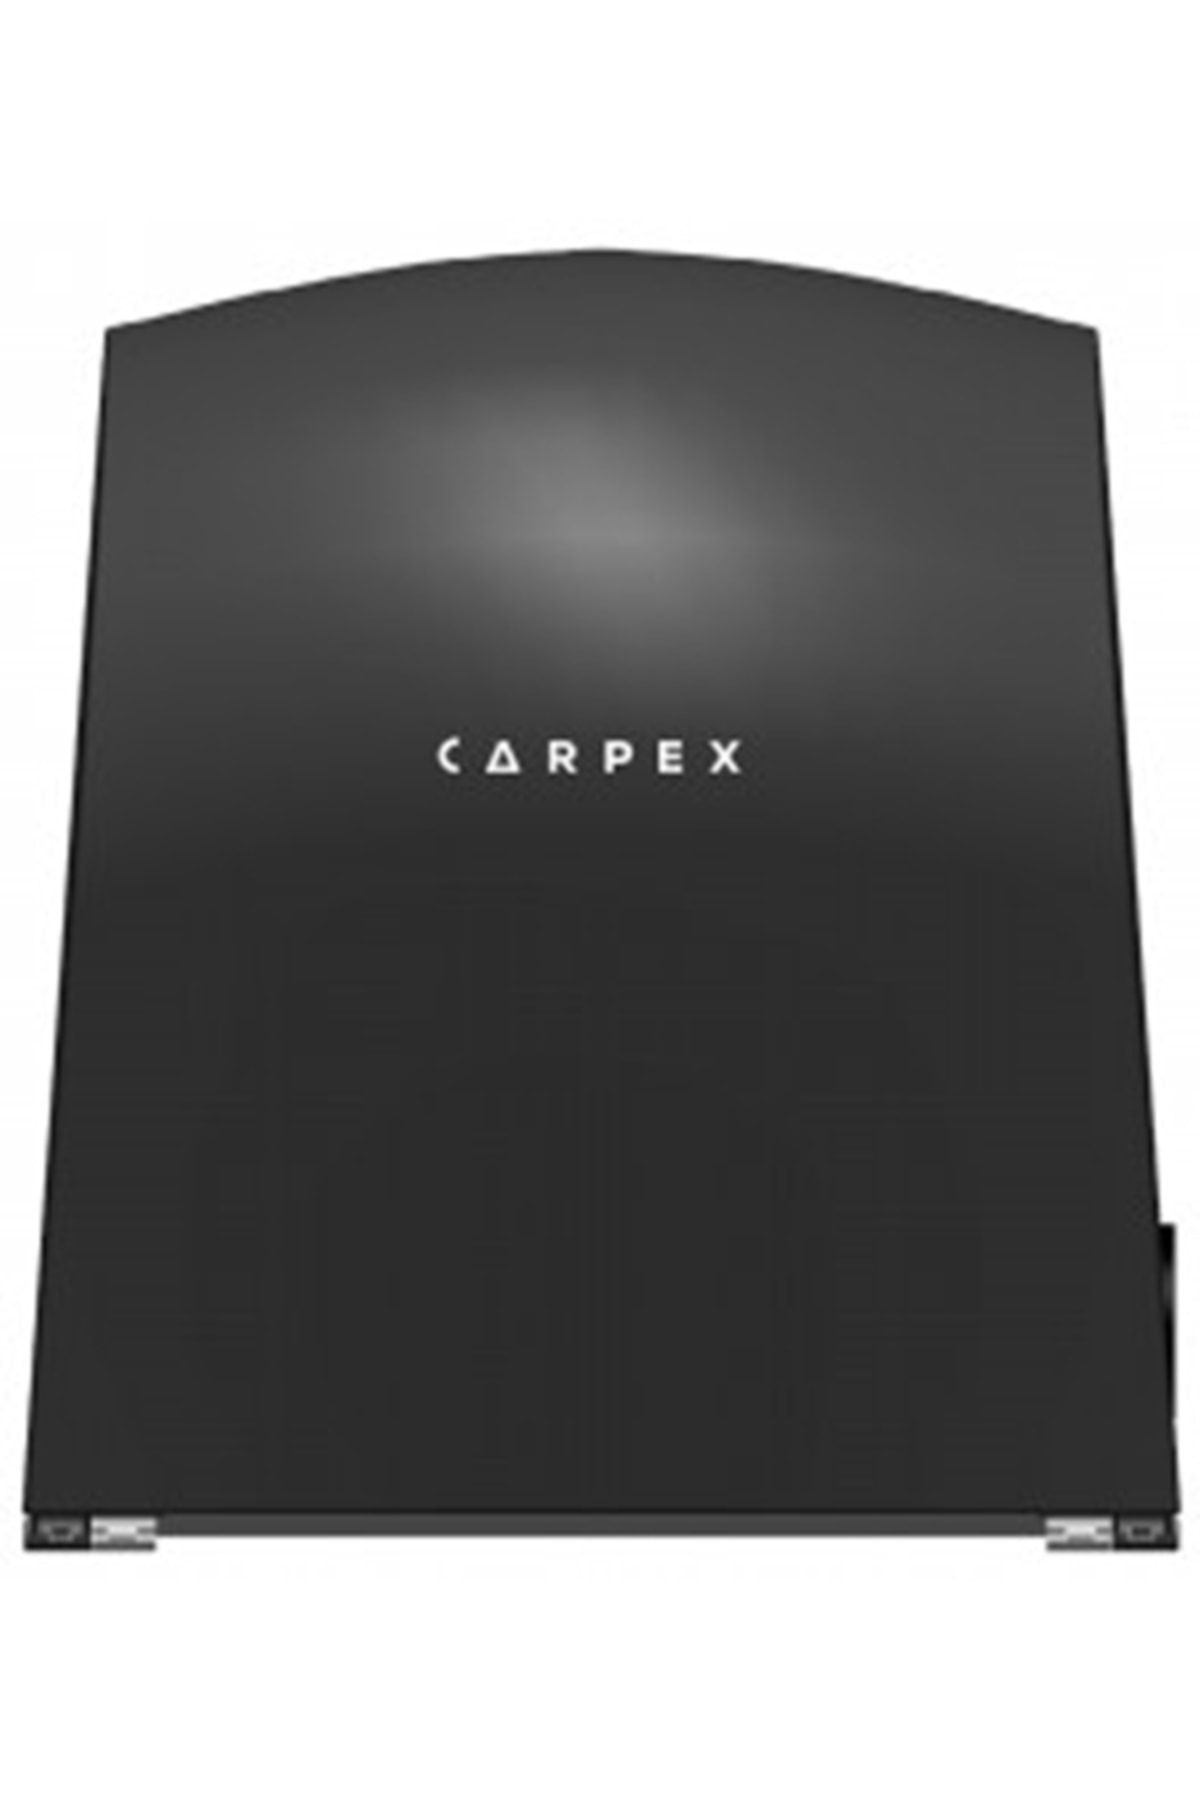 Carpex Kağıt Dispenseri Nature Autocut Siyah